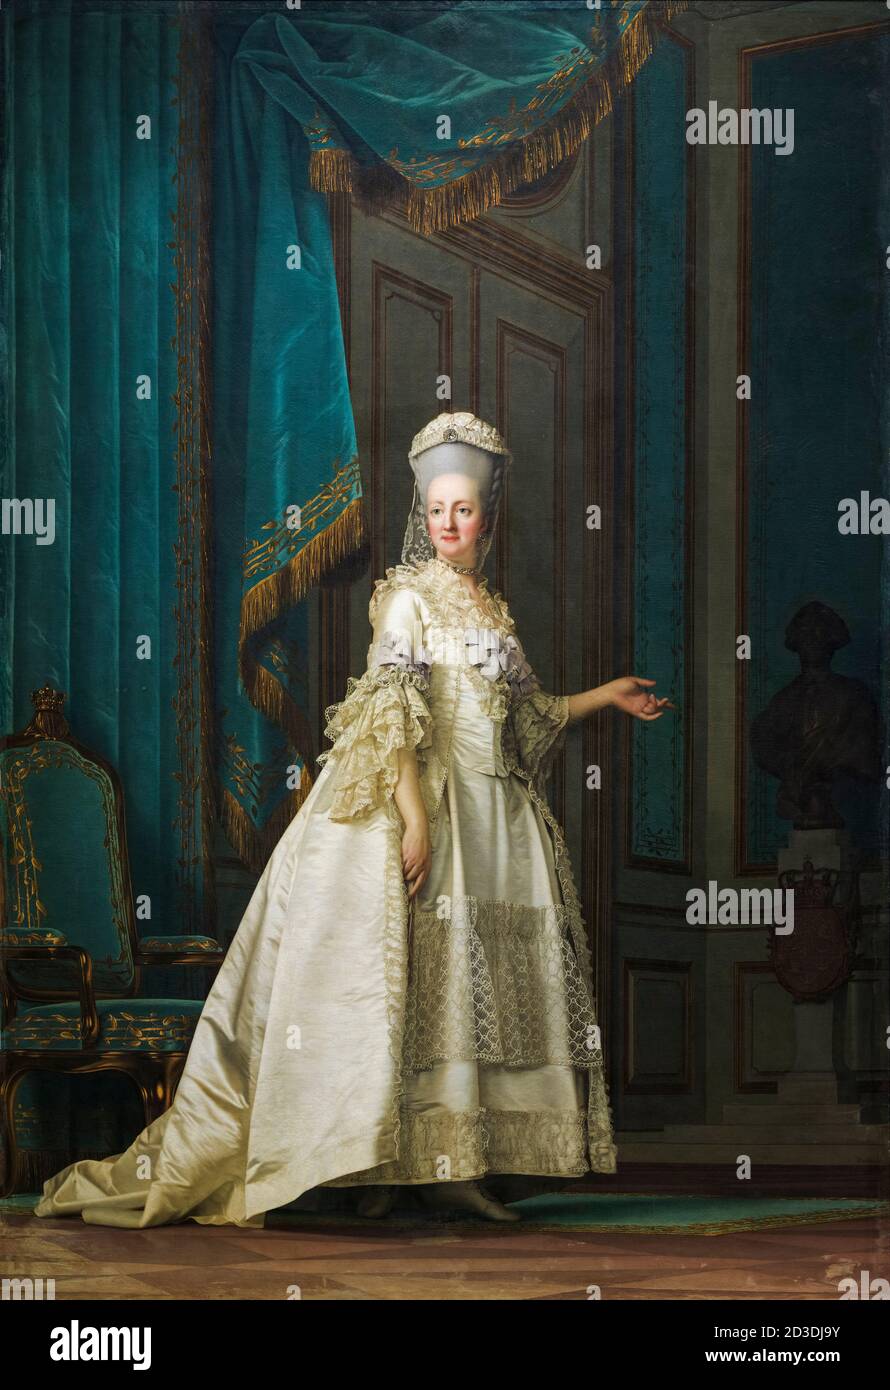 Juliana Maria of Brunswick (1729-1796), Queen of Denmark and Norway, portrait painting by Vigilius Eriksen, 1775-1776 Stock Photo